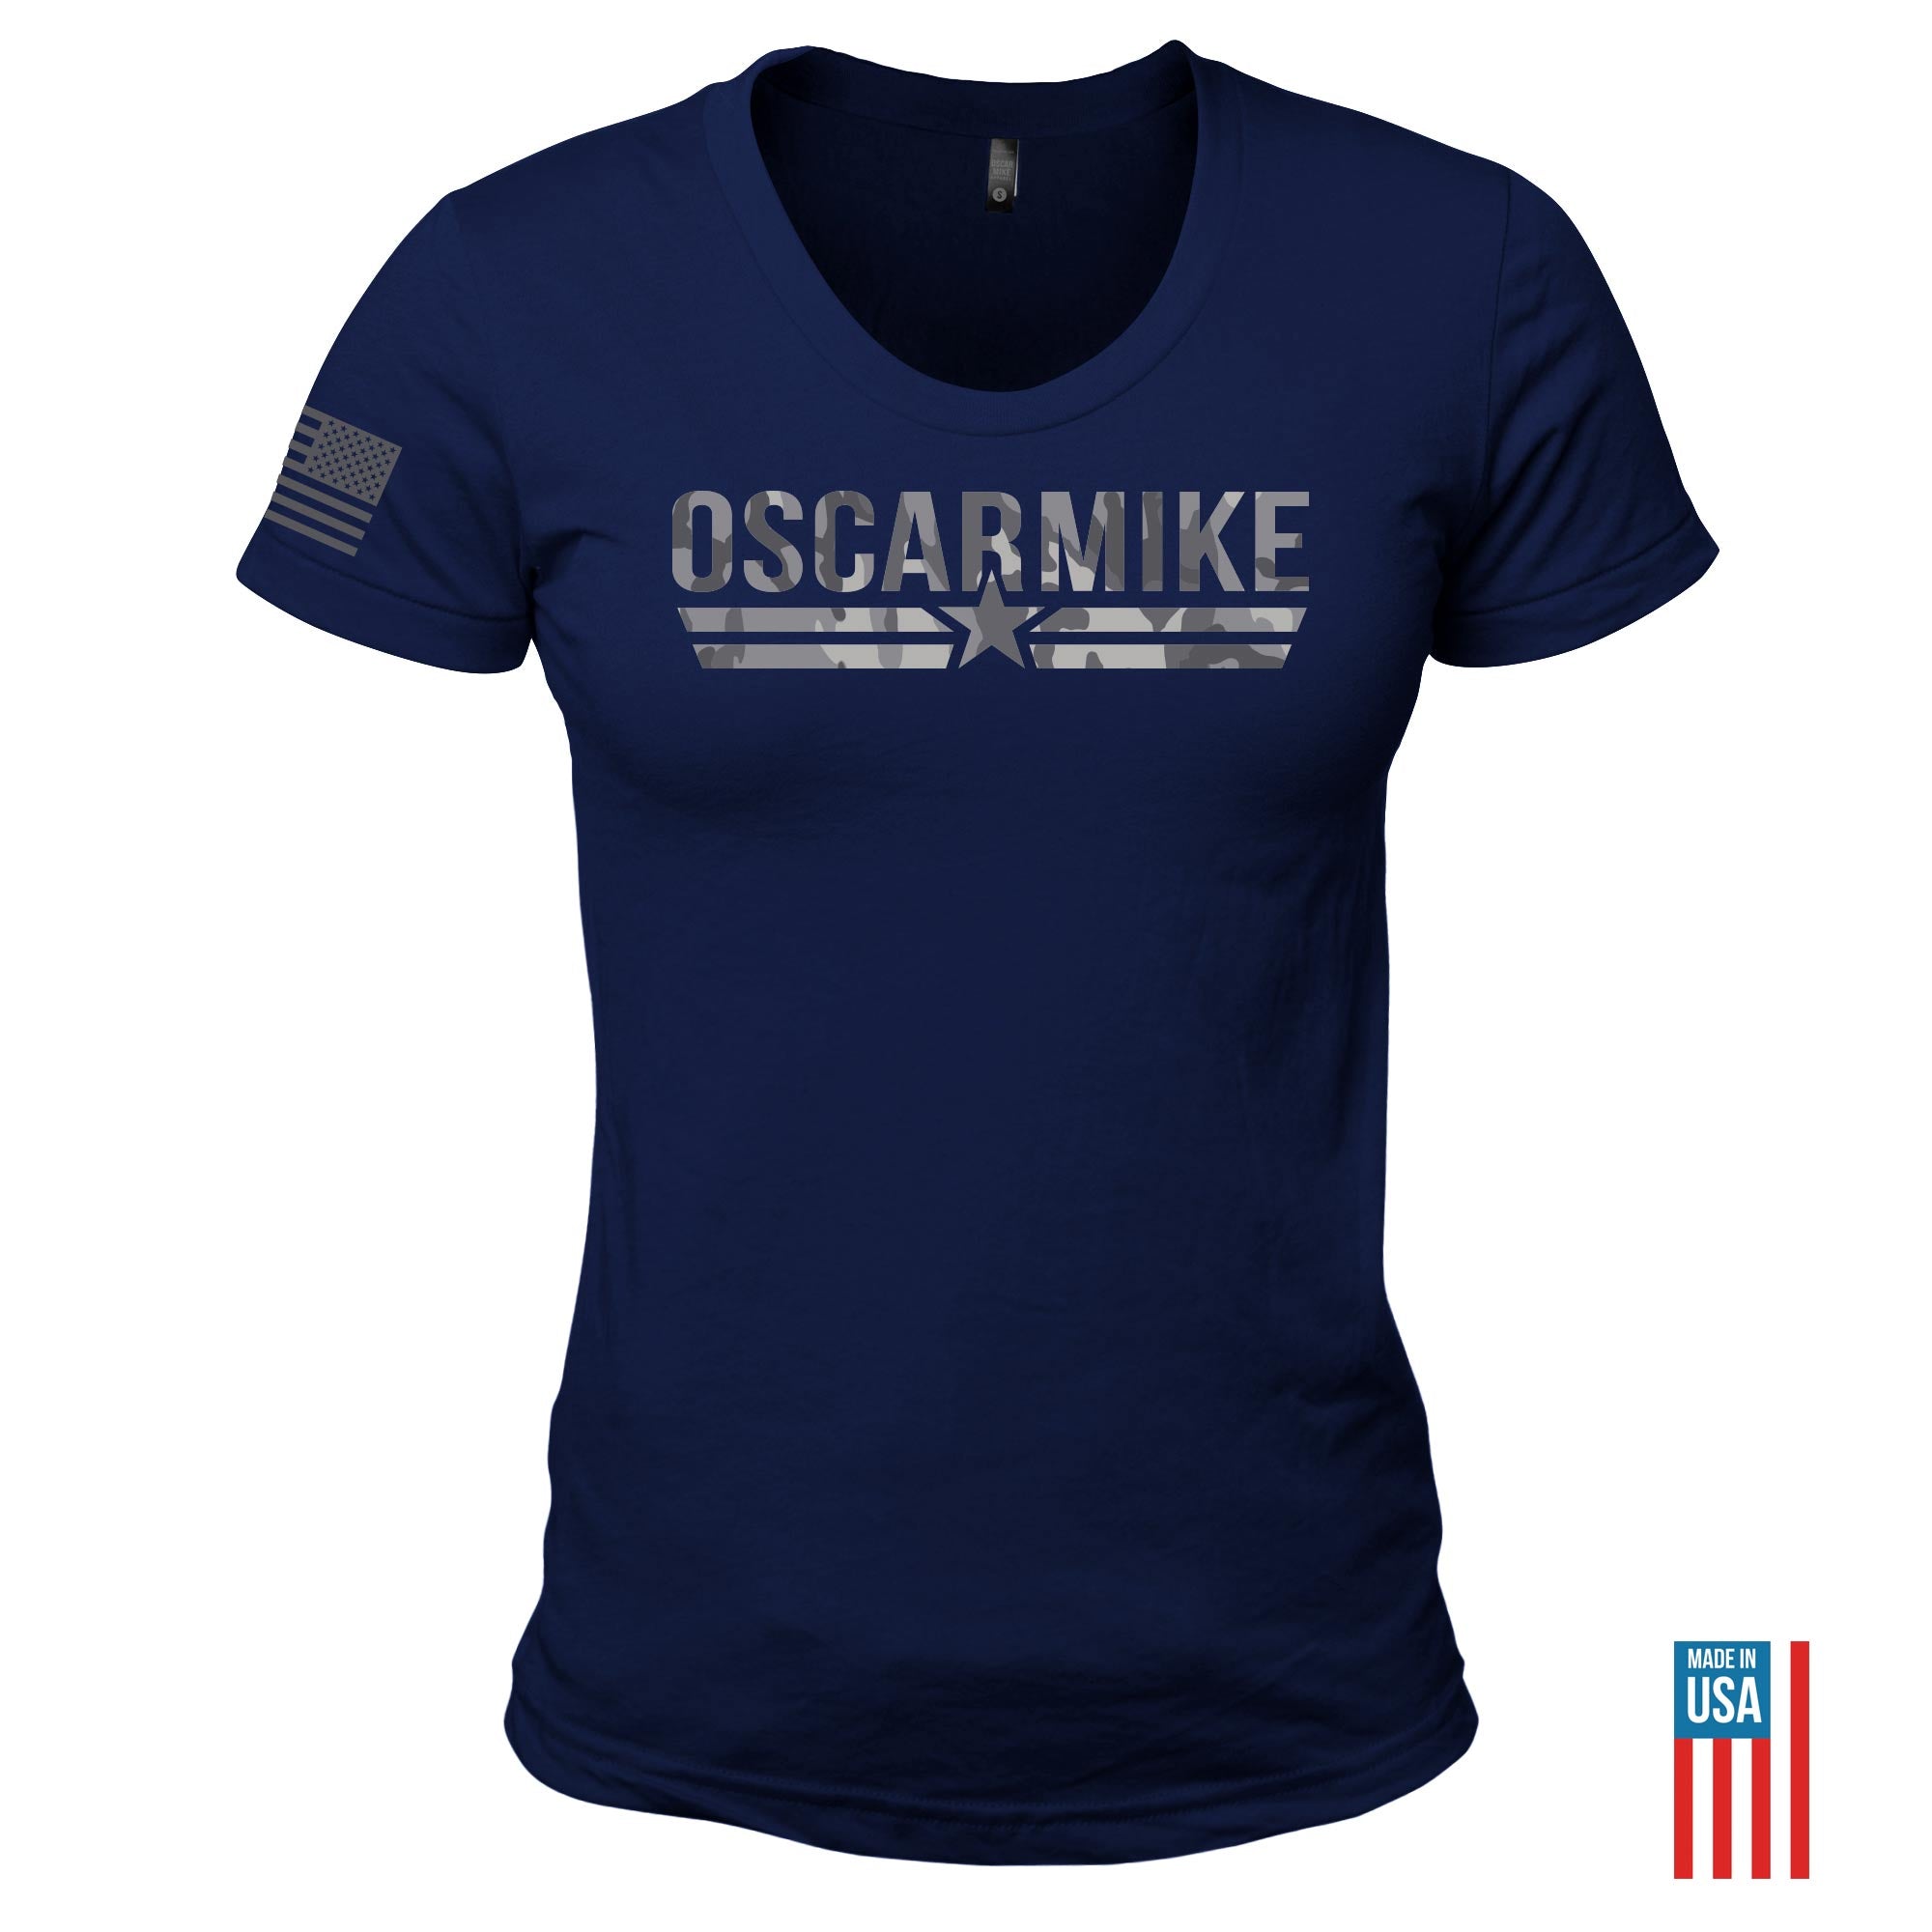 Women's Sea Camo Logo Tee T-Shirt from Oscar Mike Apparel